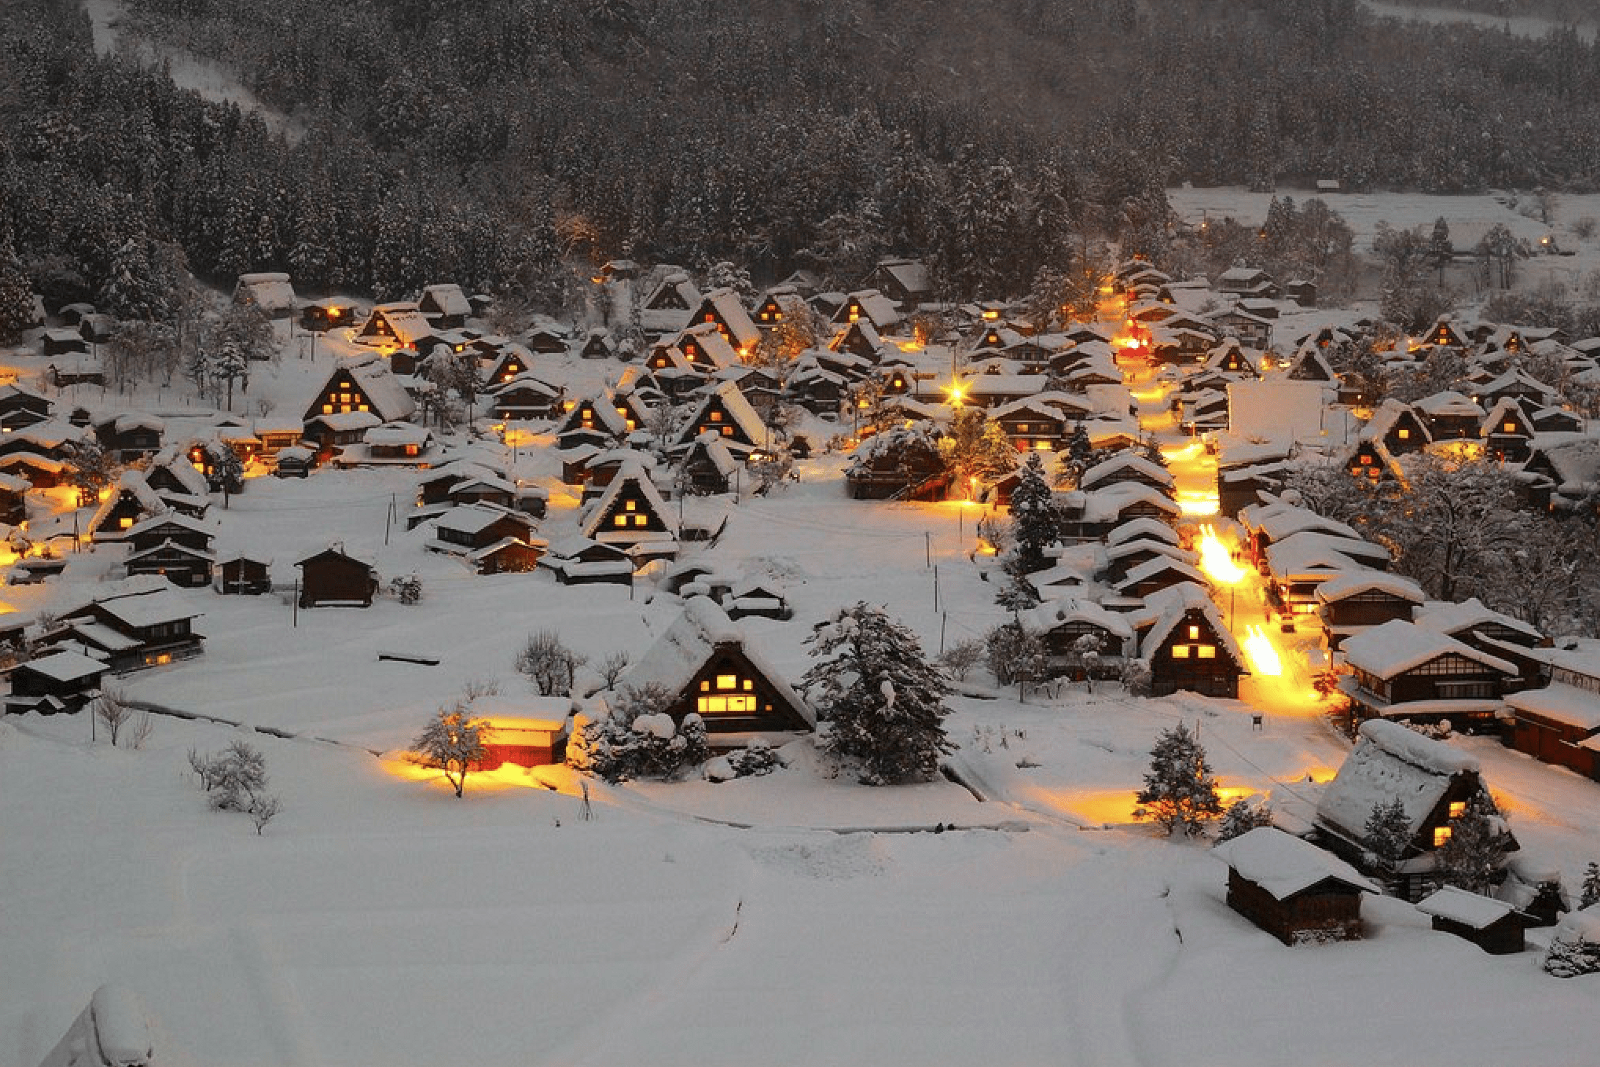 Shirakawago Village covered in snow in winter